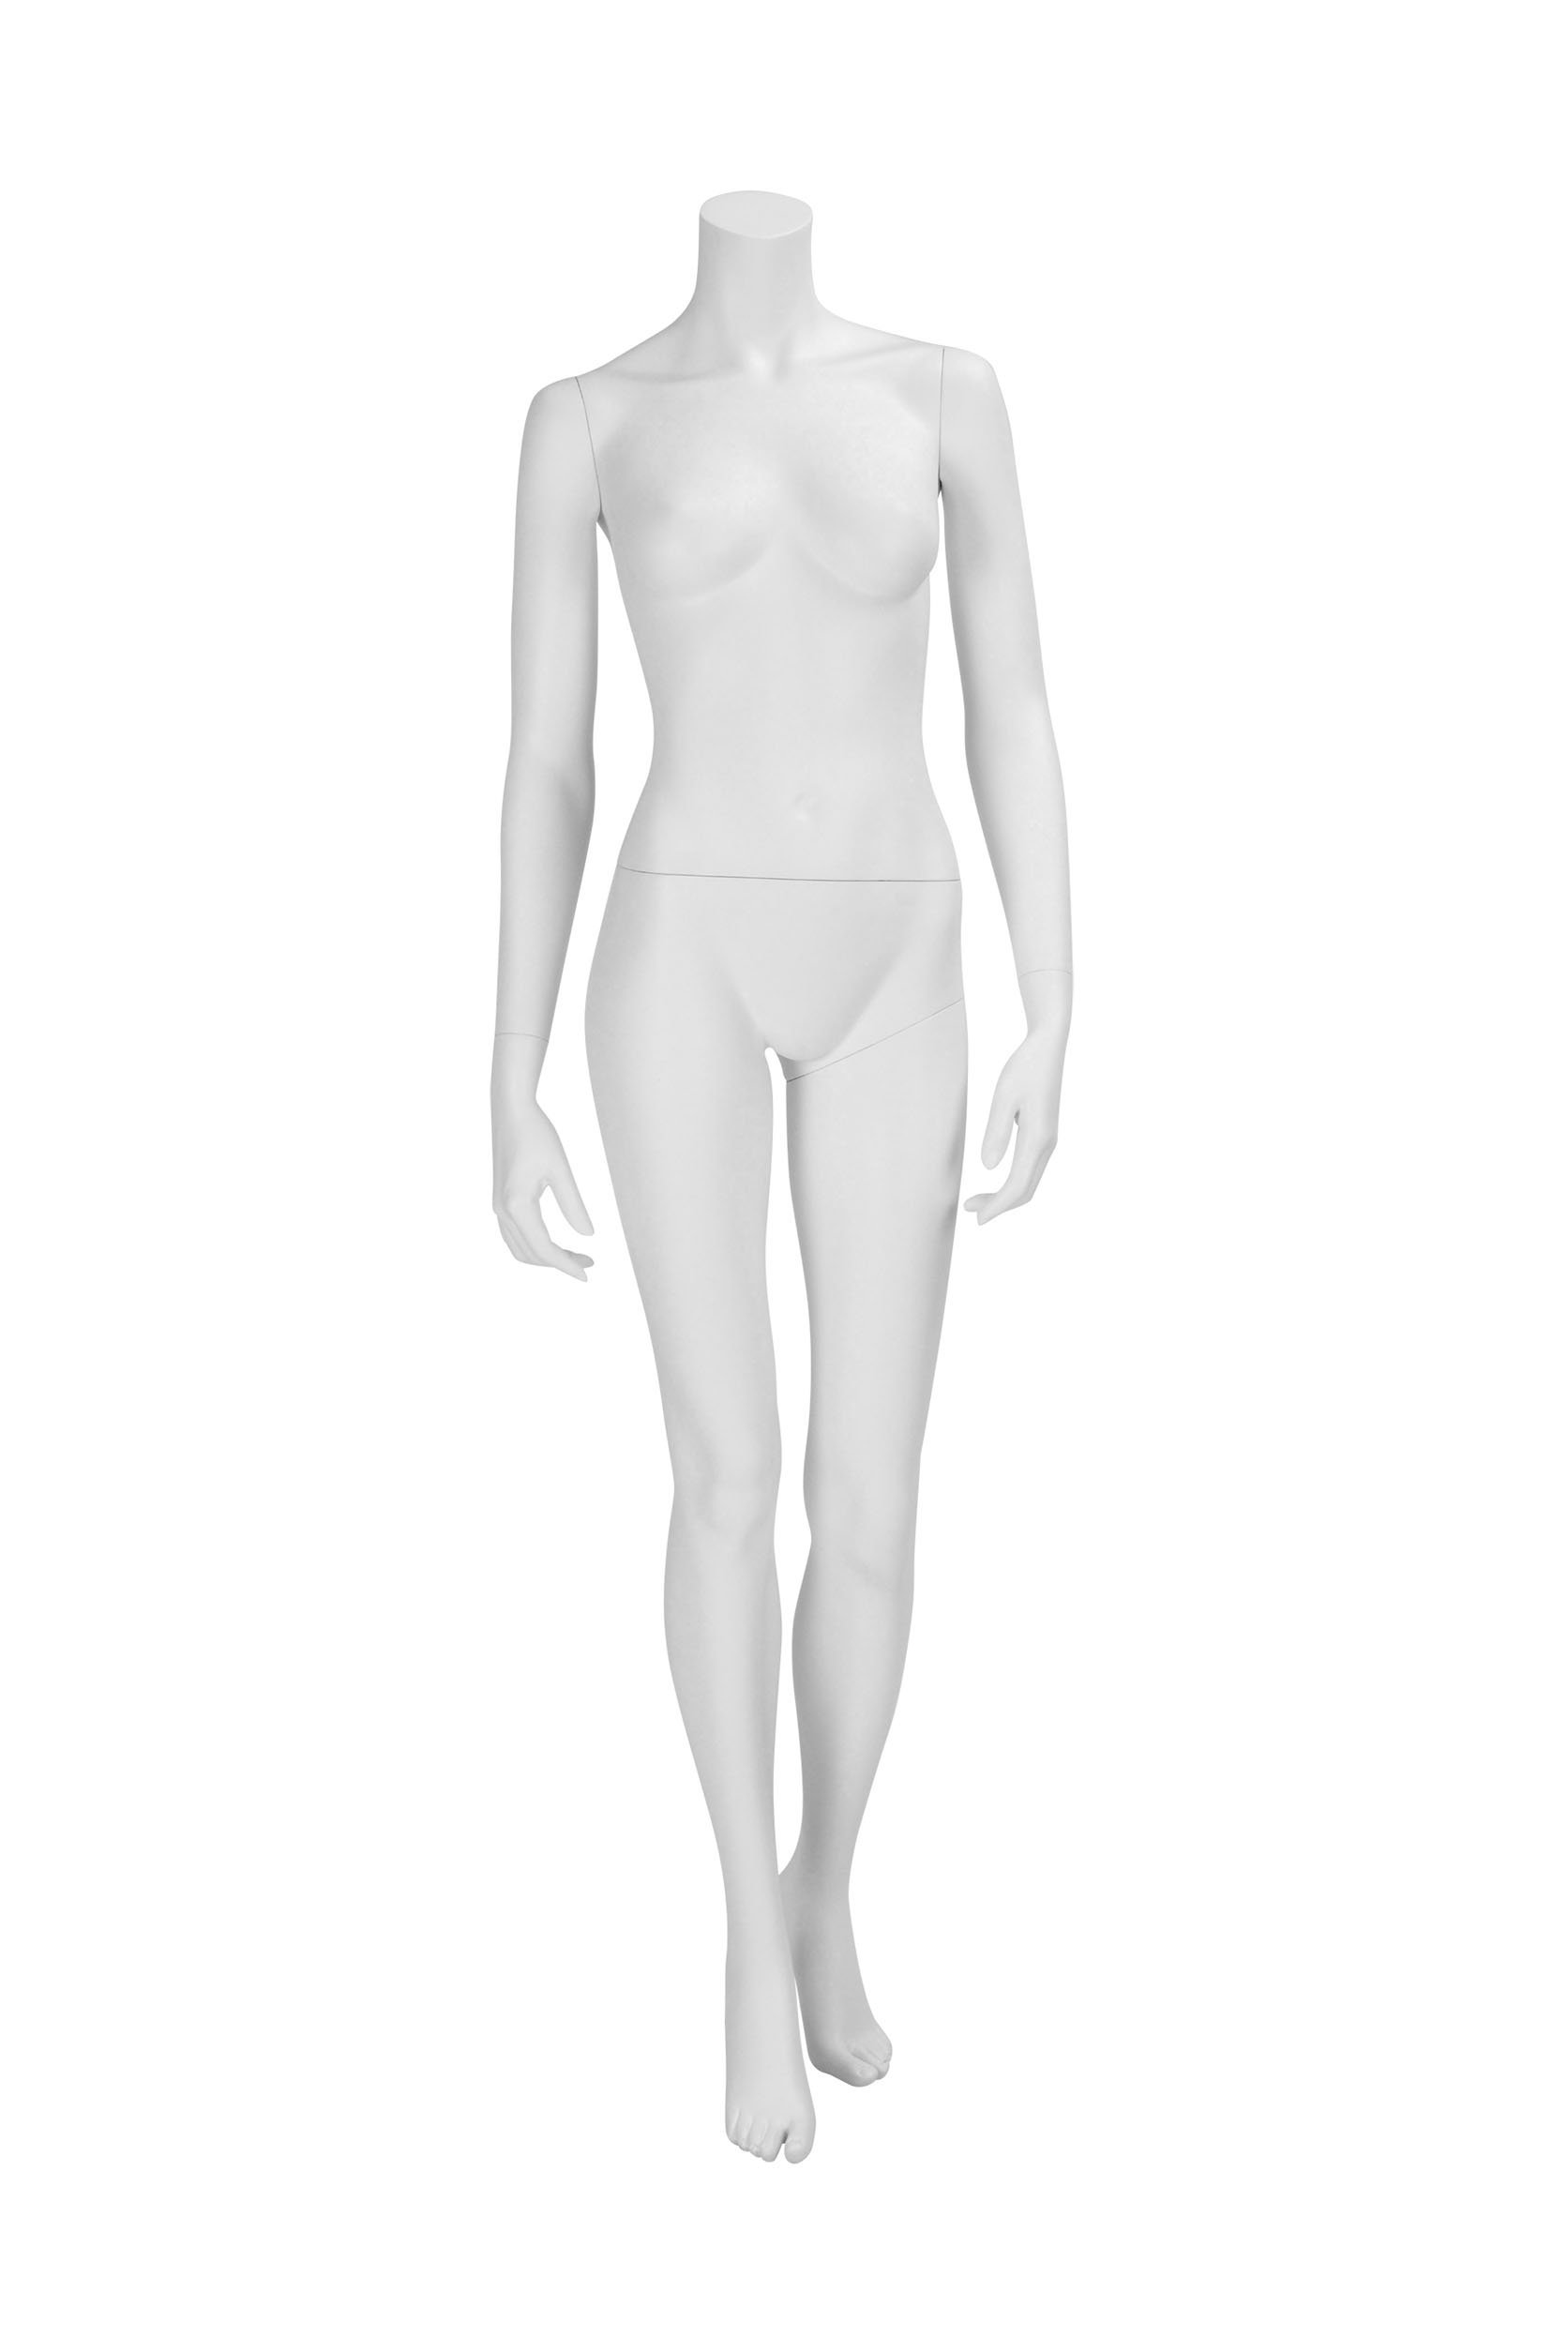 Headless Female Mannequin Pos. 01 - Genesis Mannequins USA